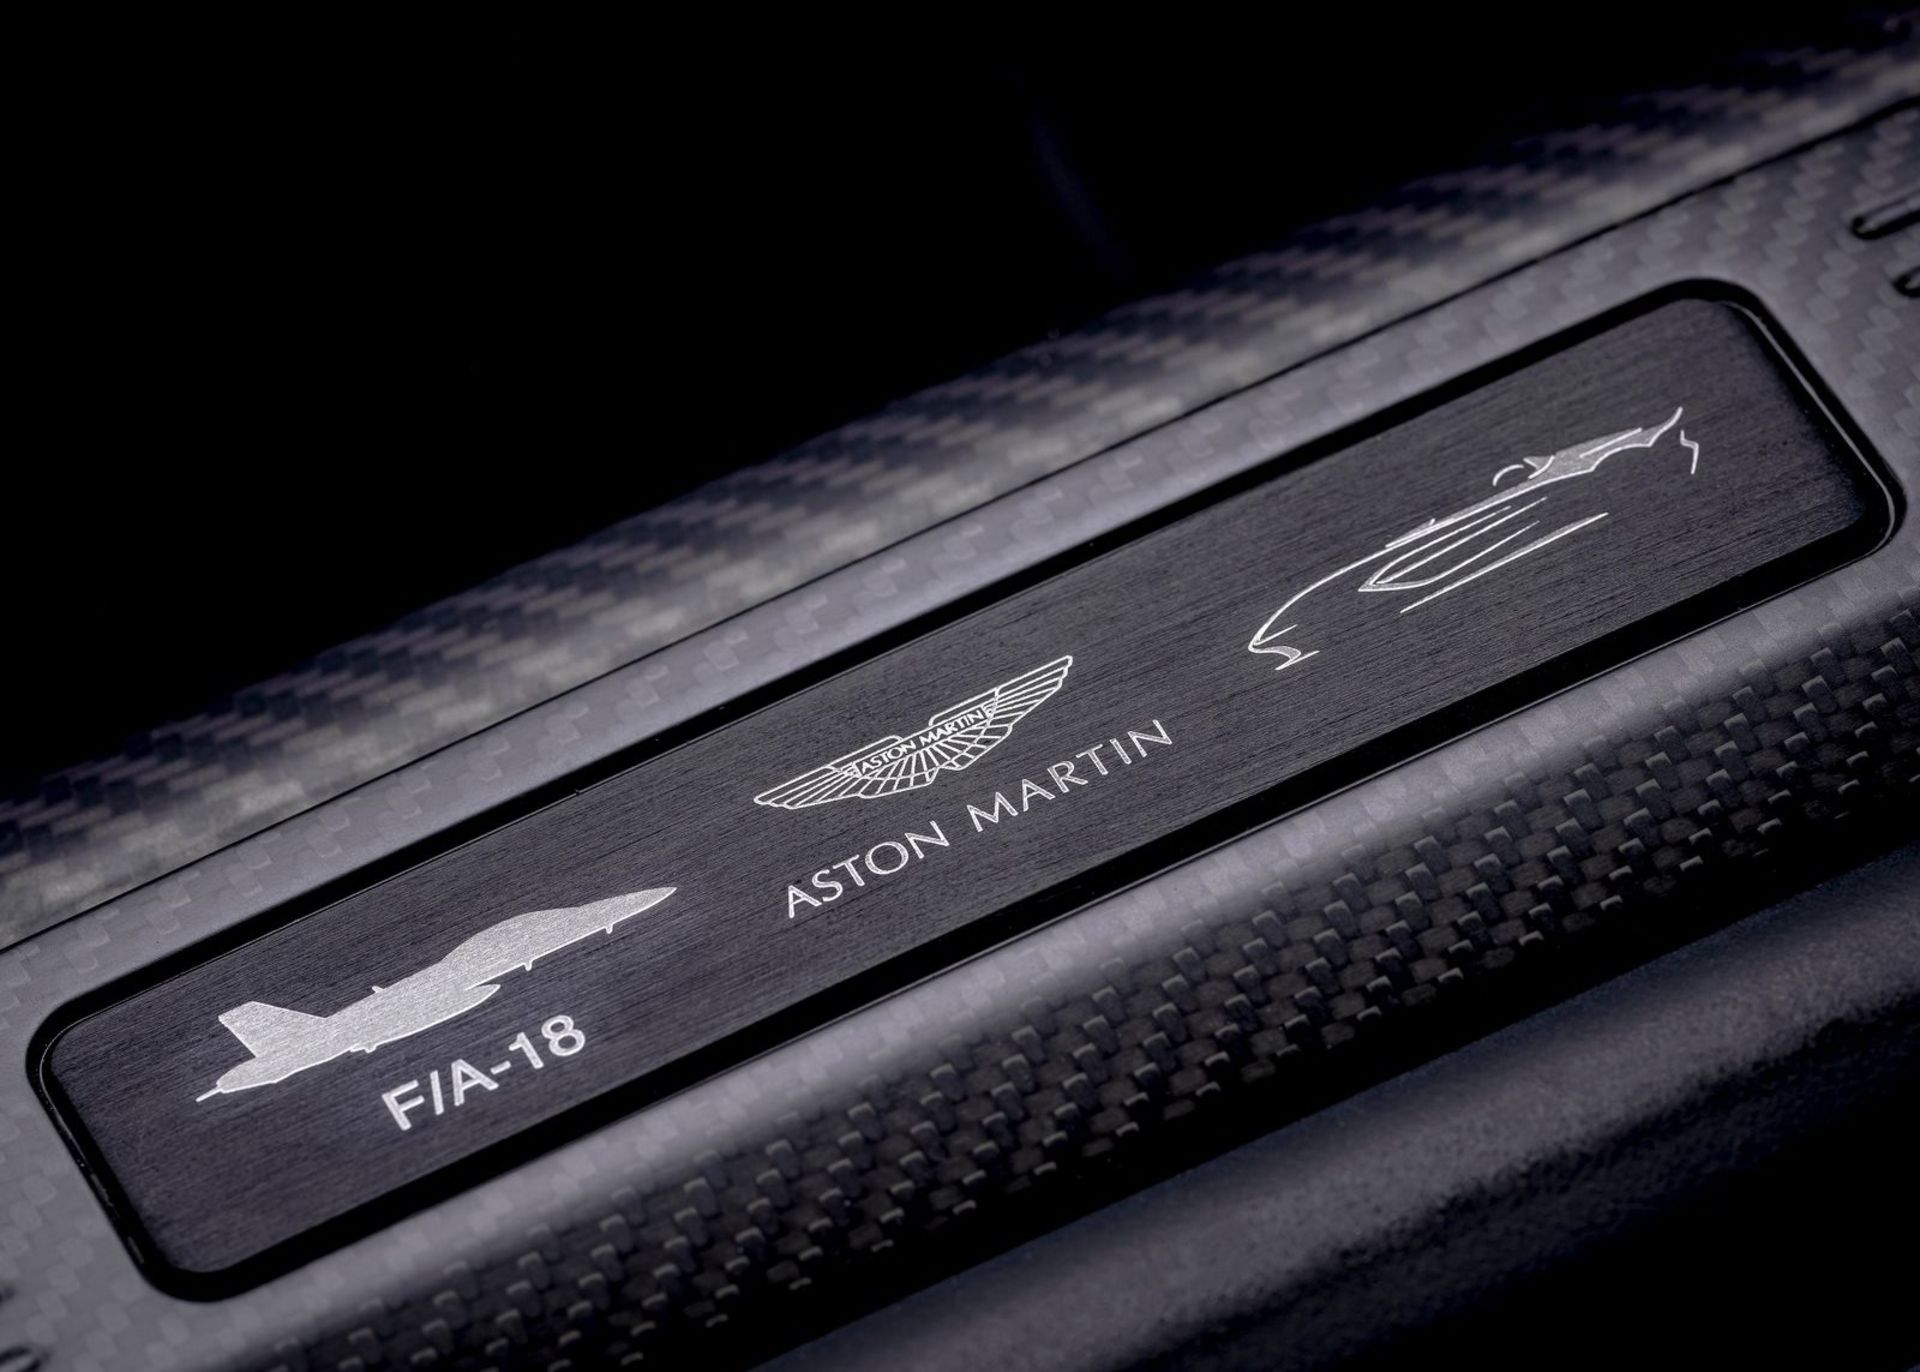 Aston Martin V12 Speedster new